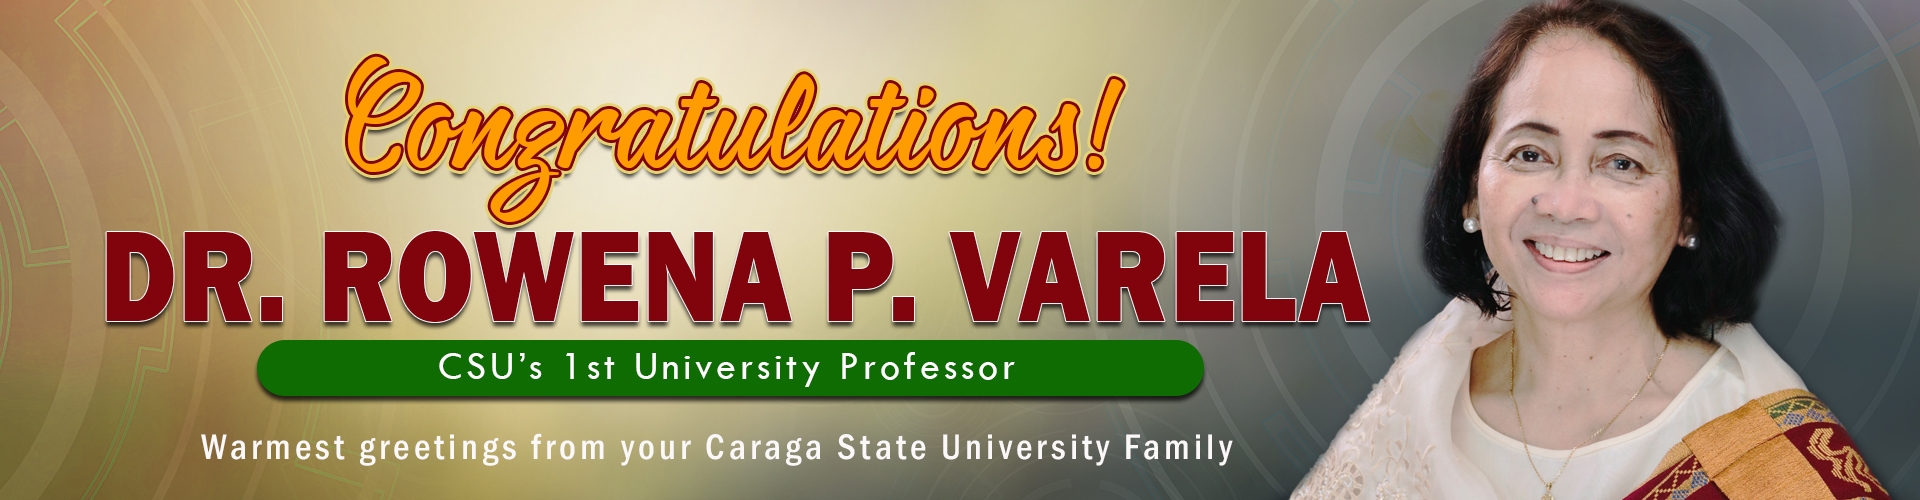 CSU's 1st University Professor Dr. Rowena P. Varela